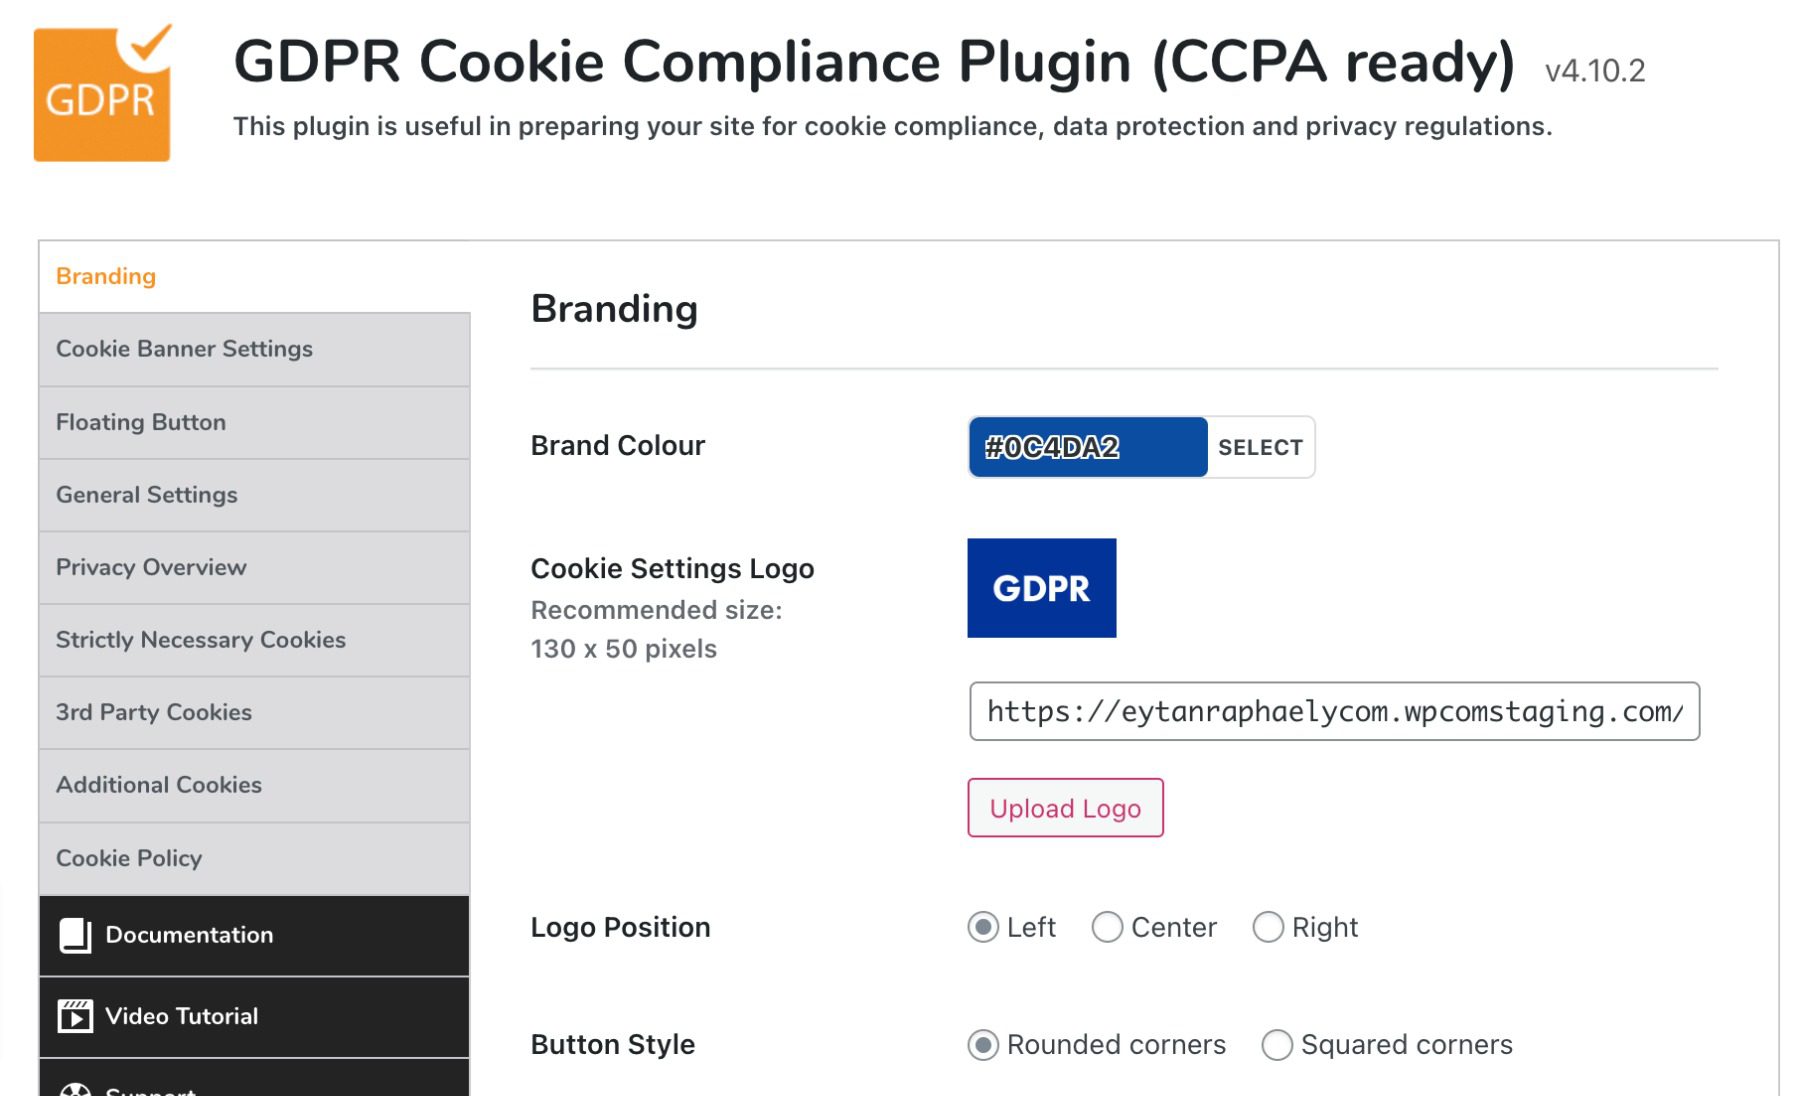 GDPR Cookie Compliance